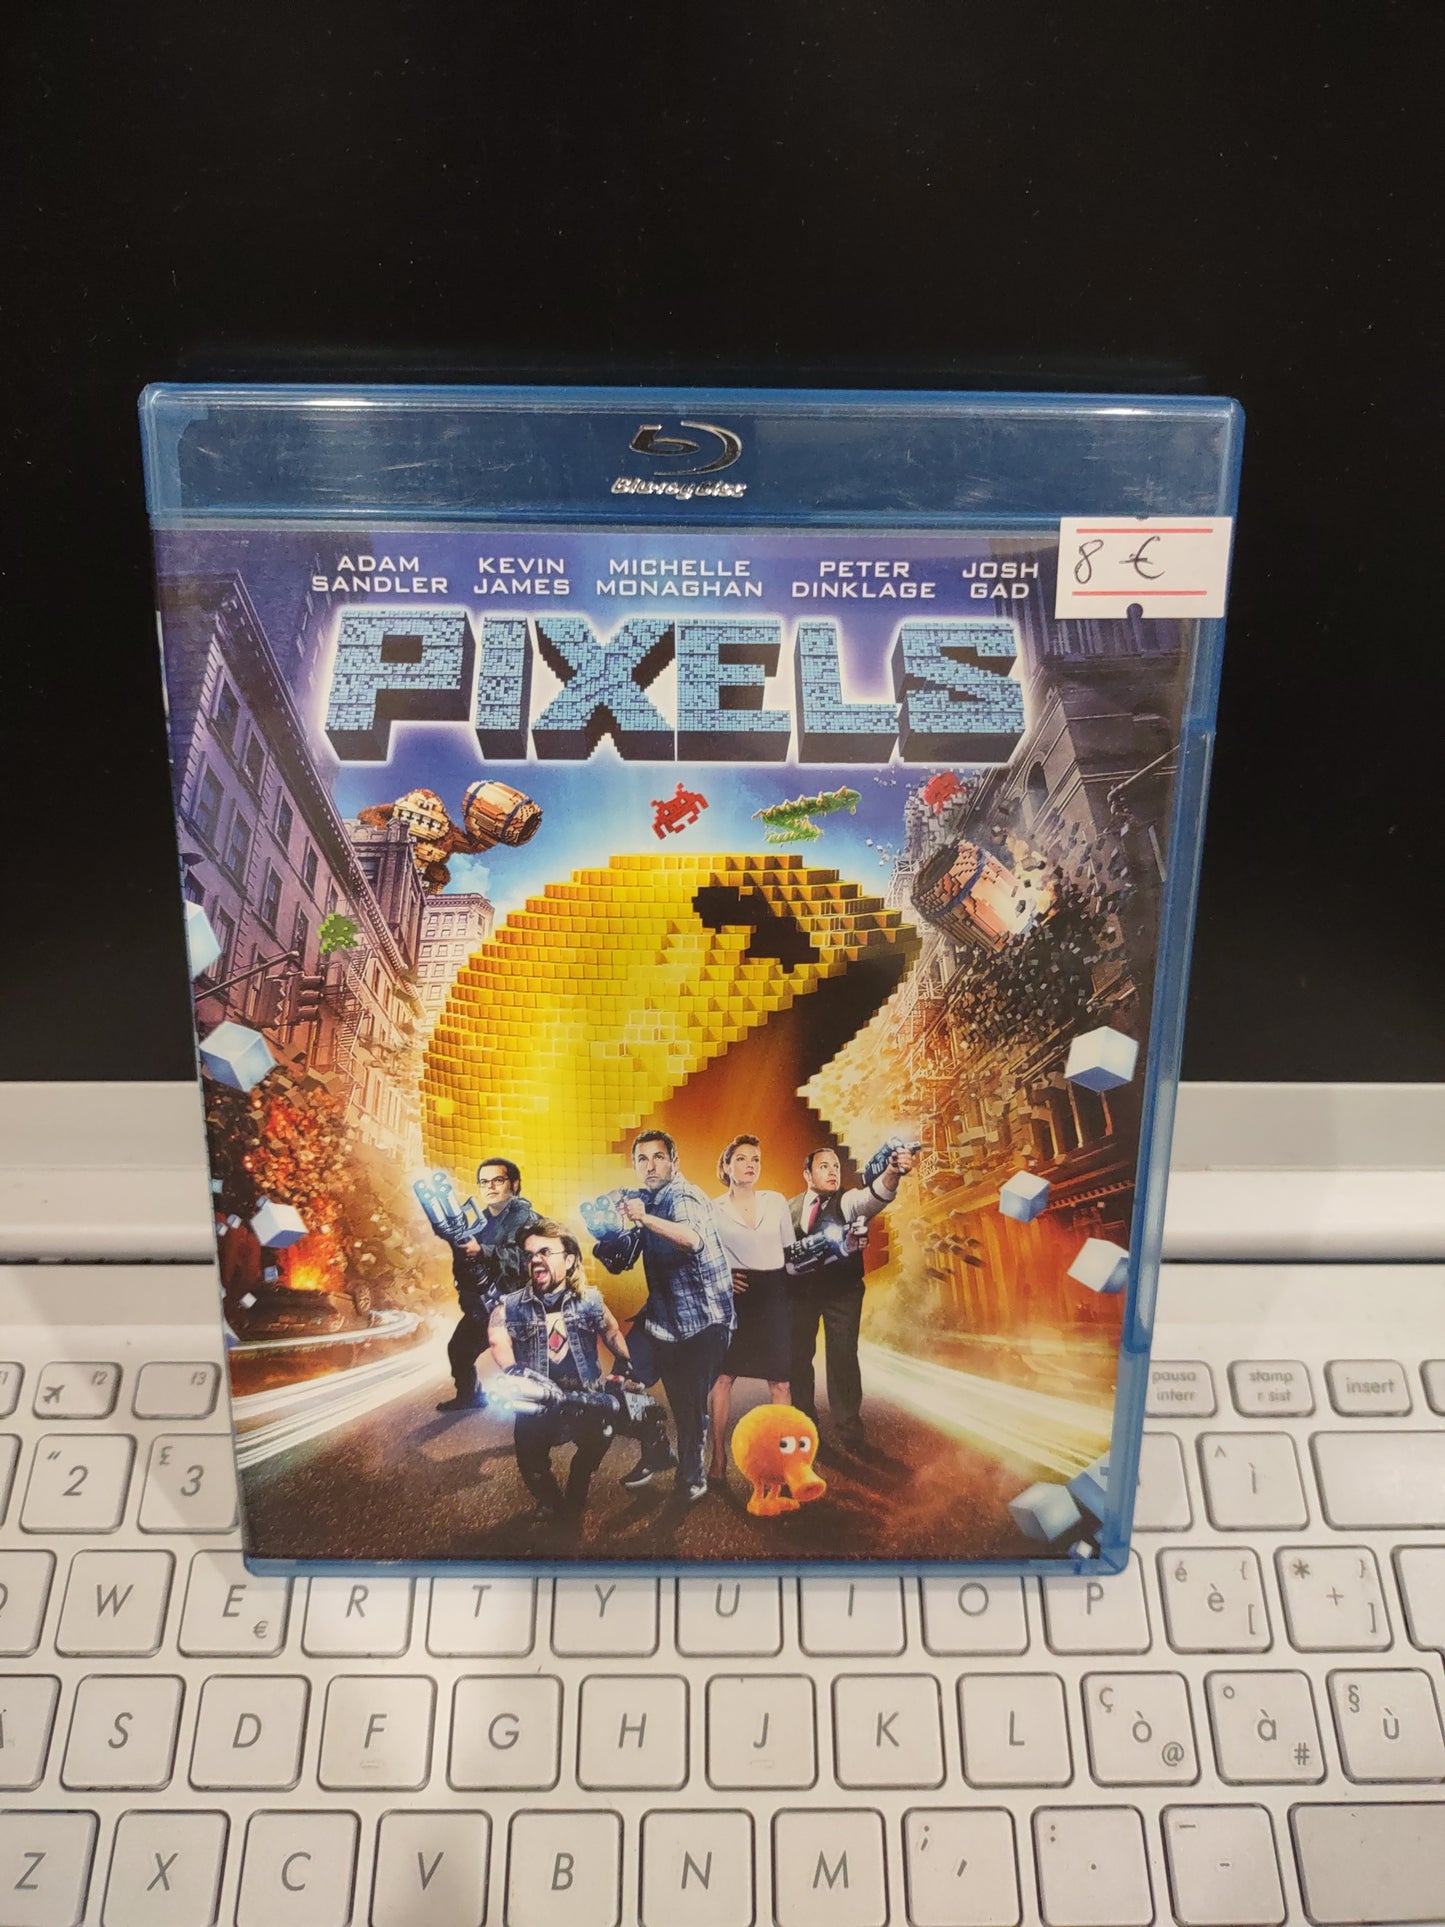 Film Blu-ray pixels con Pacman donkey Kong qb